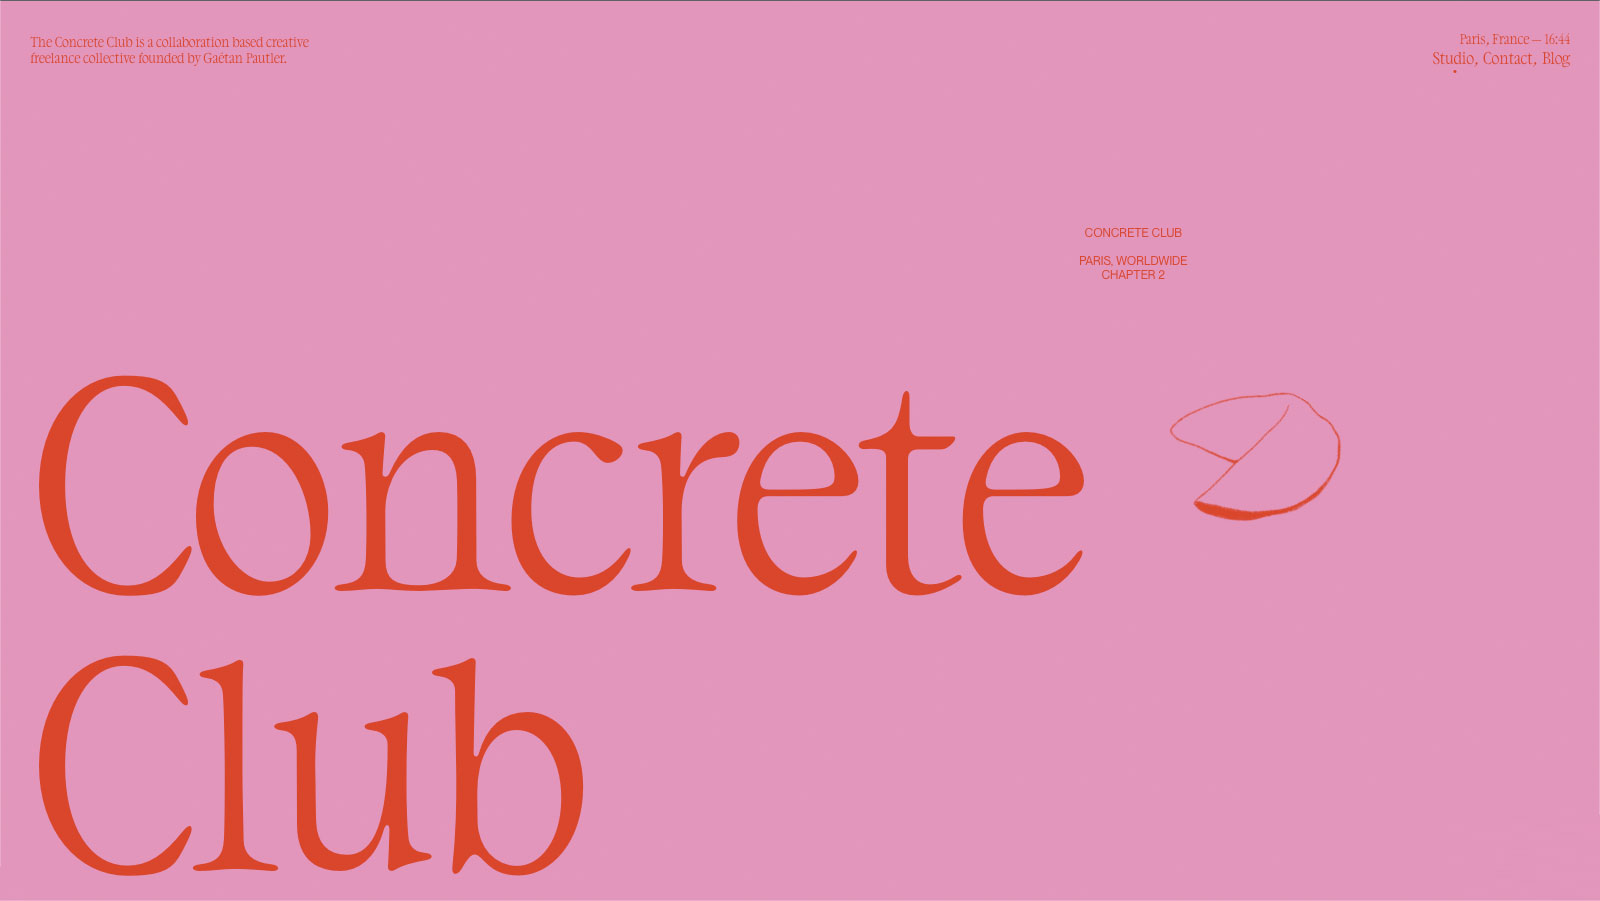 Concrete Club